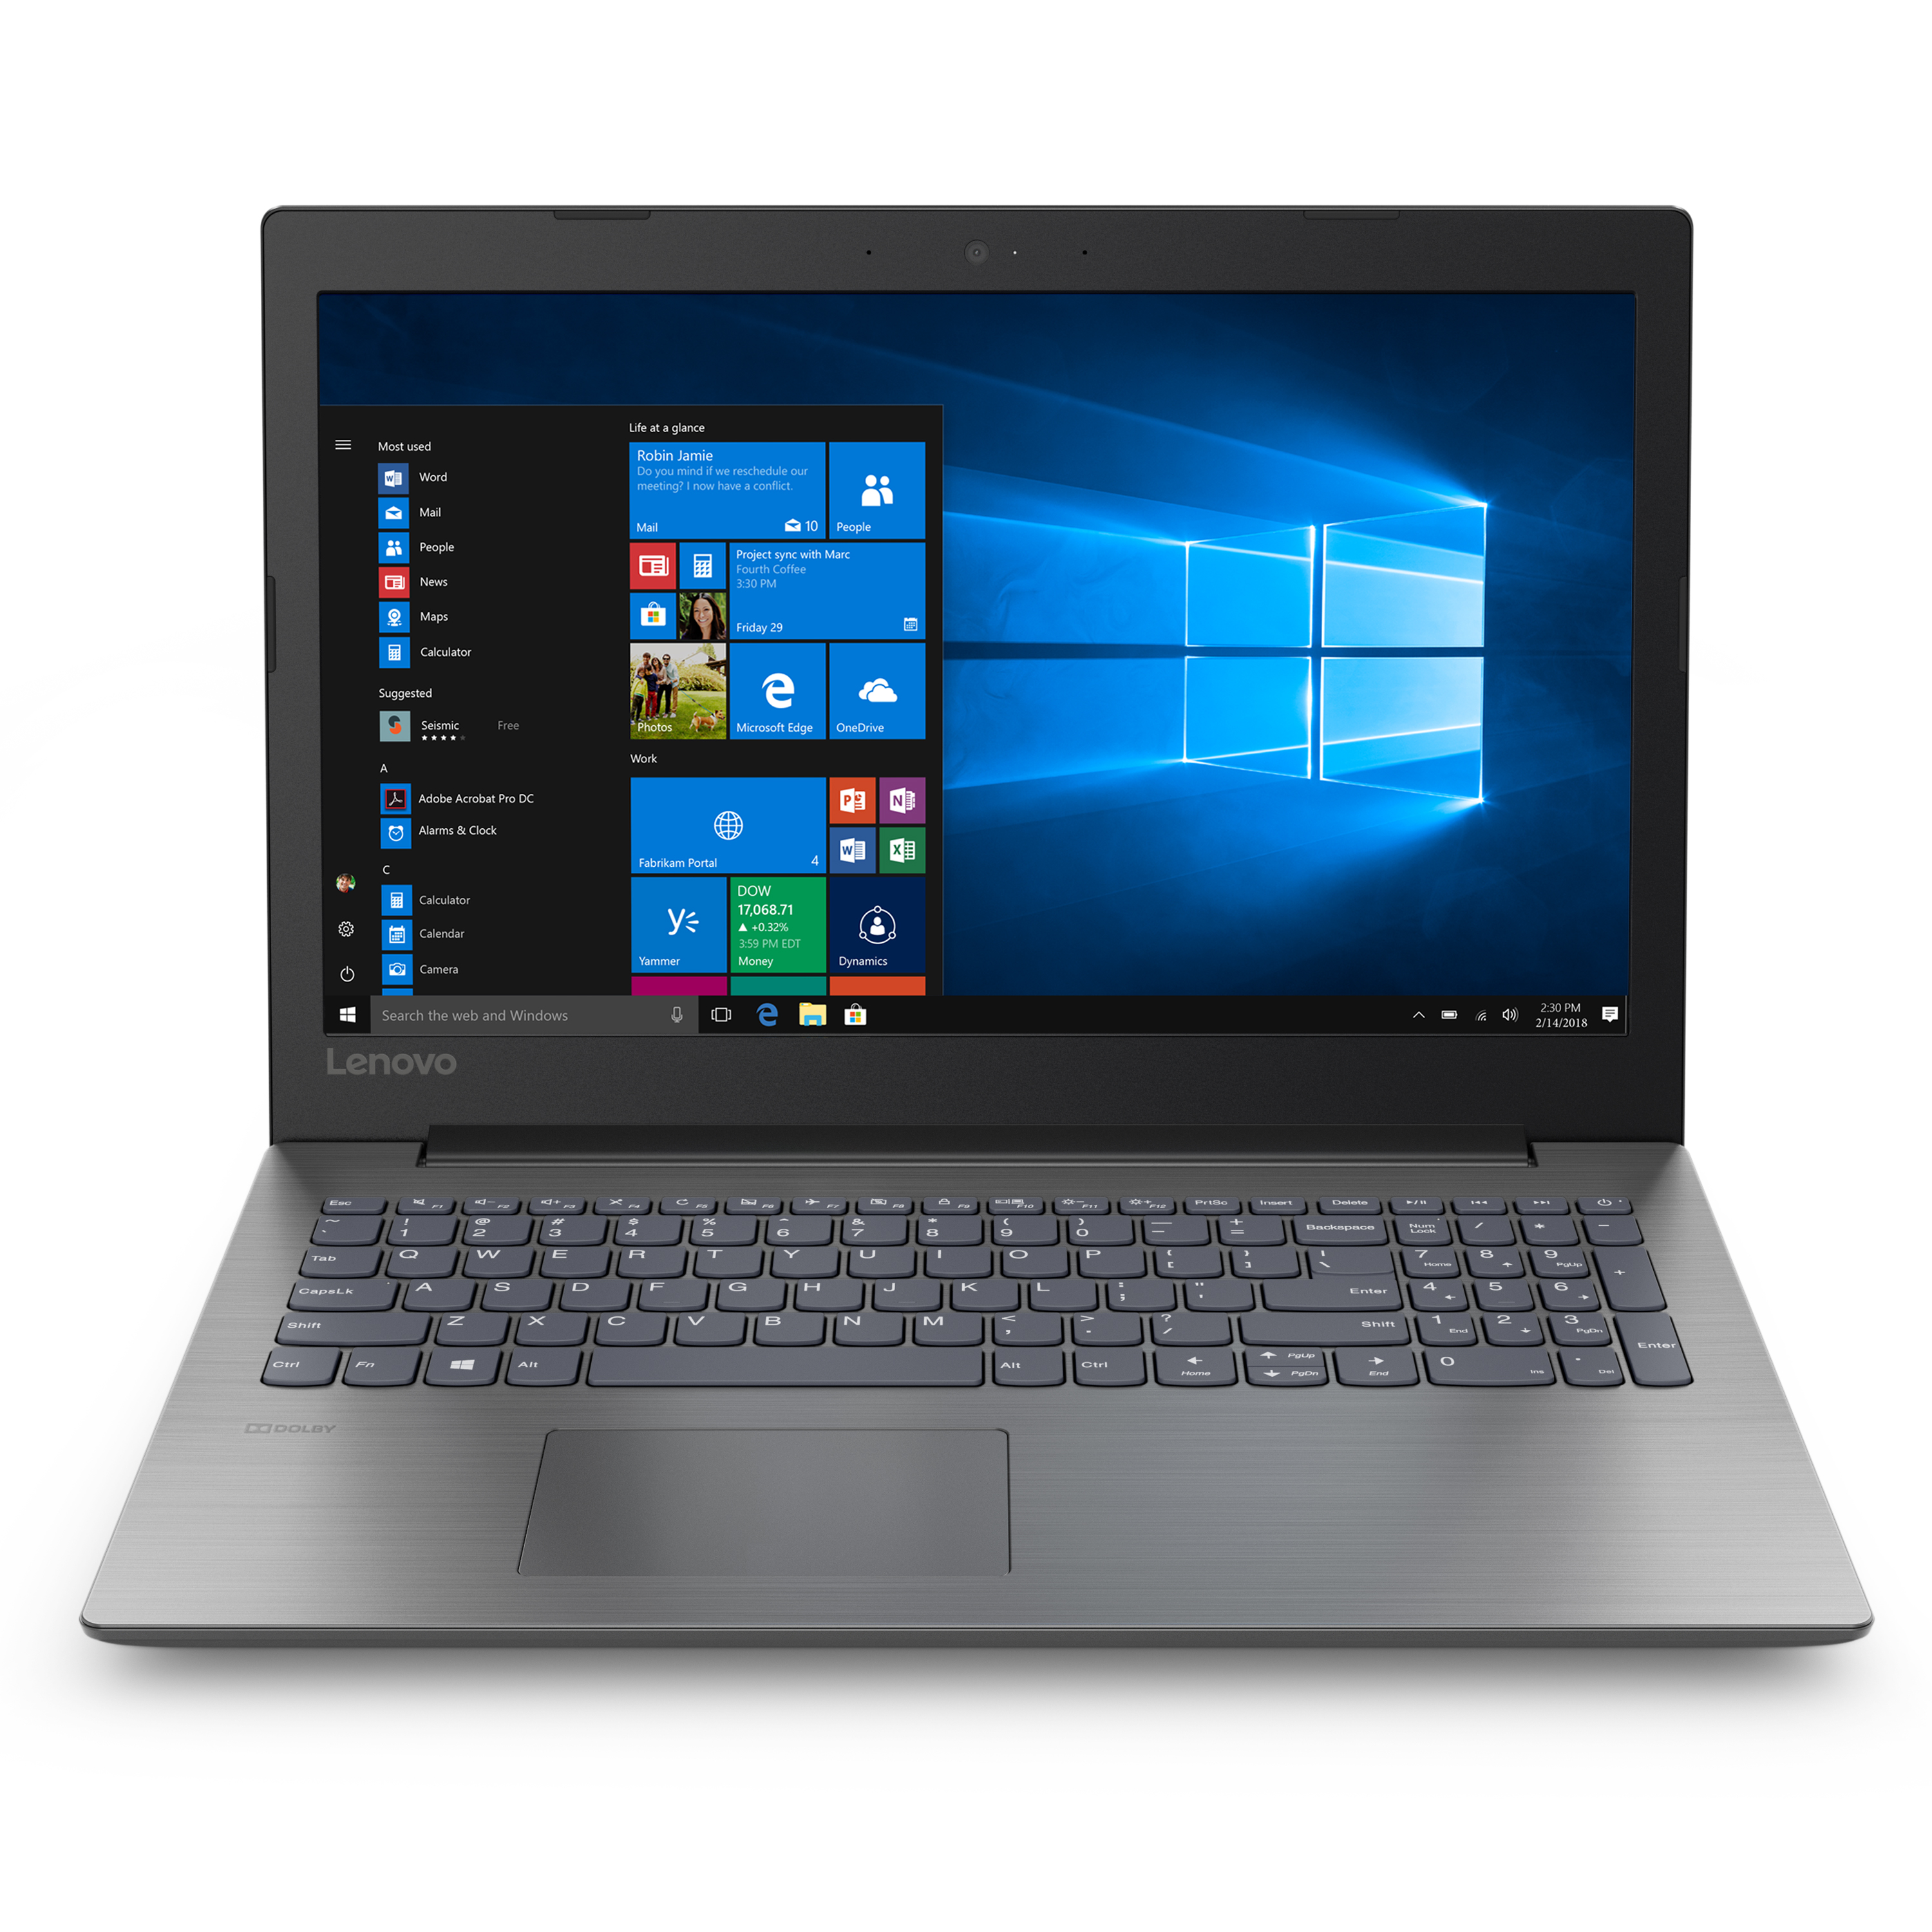 Lenovo ideapad 330 (81FK00ECUS) 15.6″ Gaming Laptop with 8th Gen Intel Core i5 Quad-Core, 8GB RAM, 1TB HDD + 128GB SSD